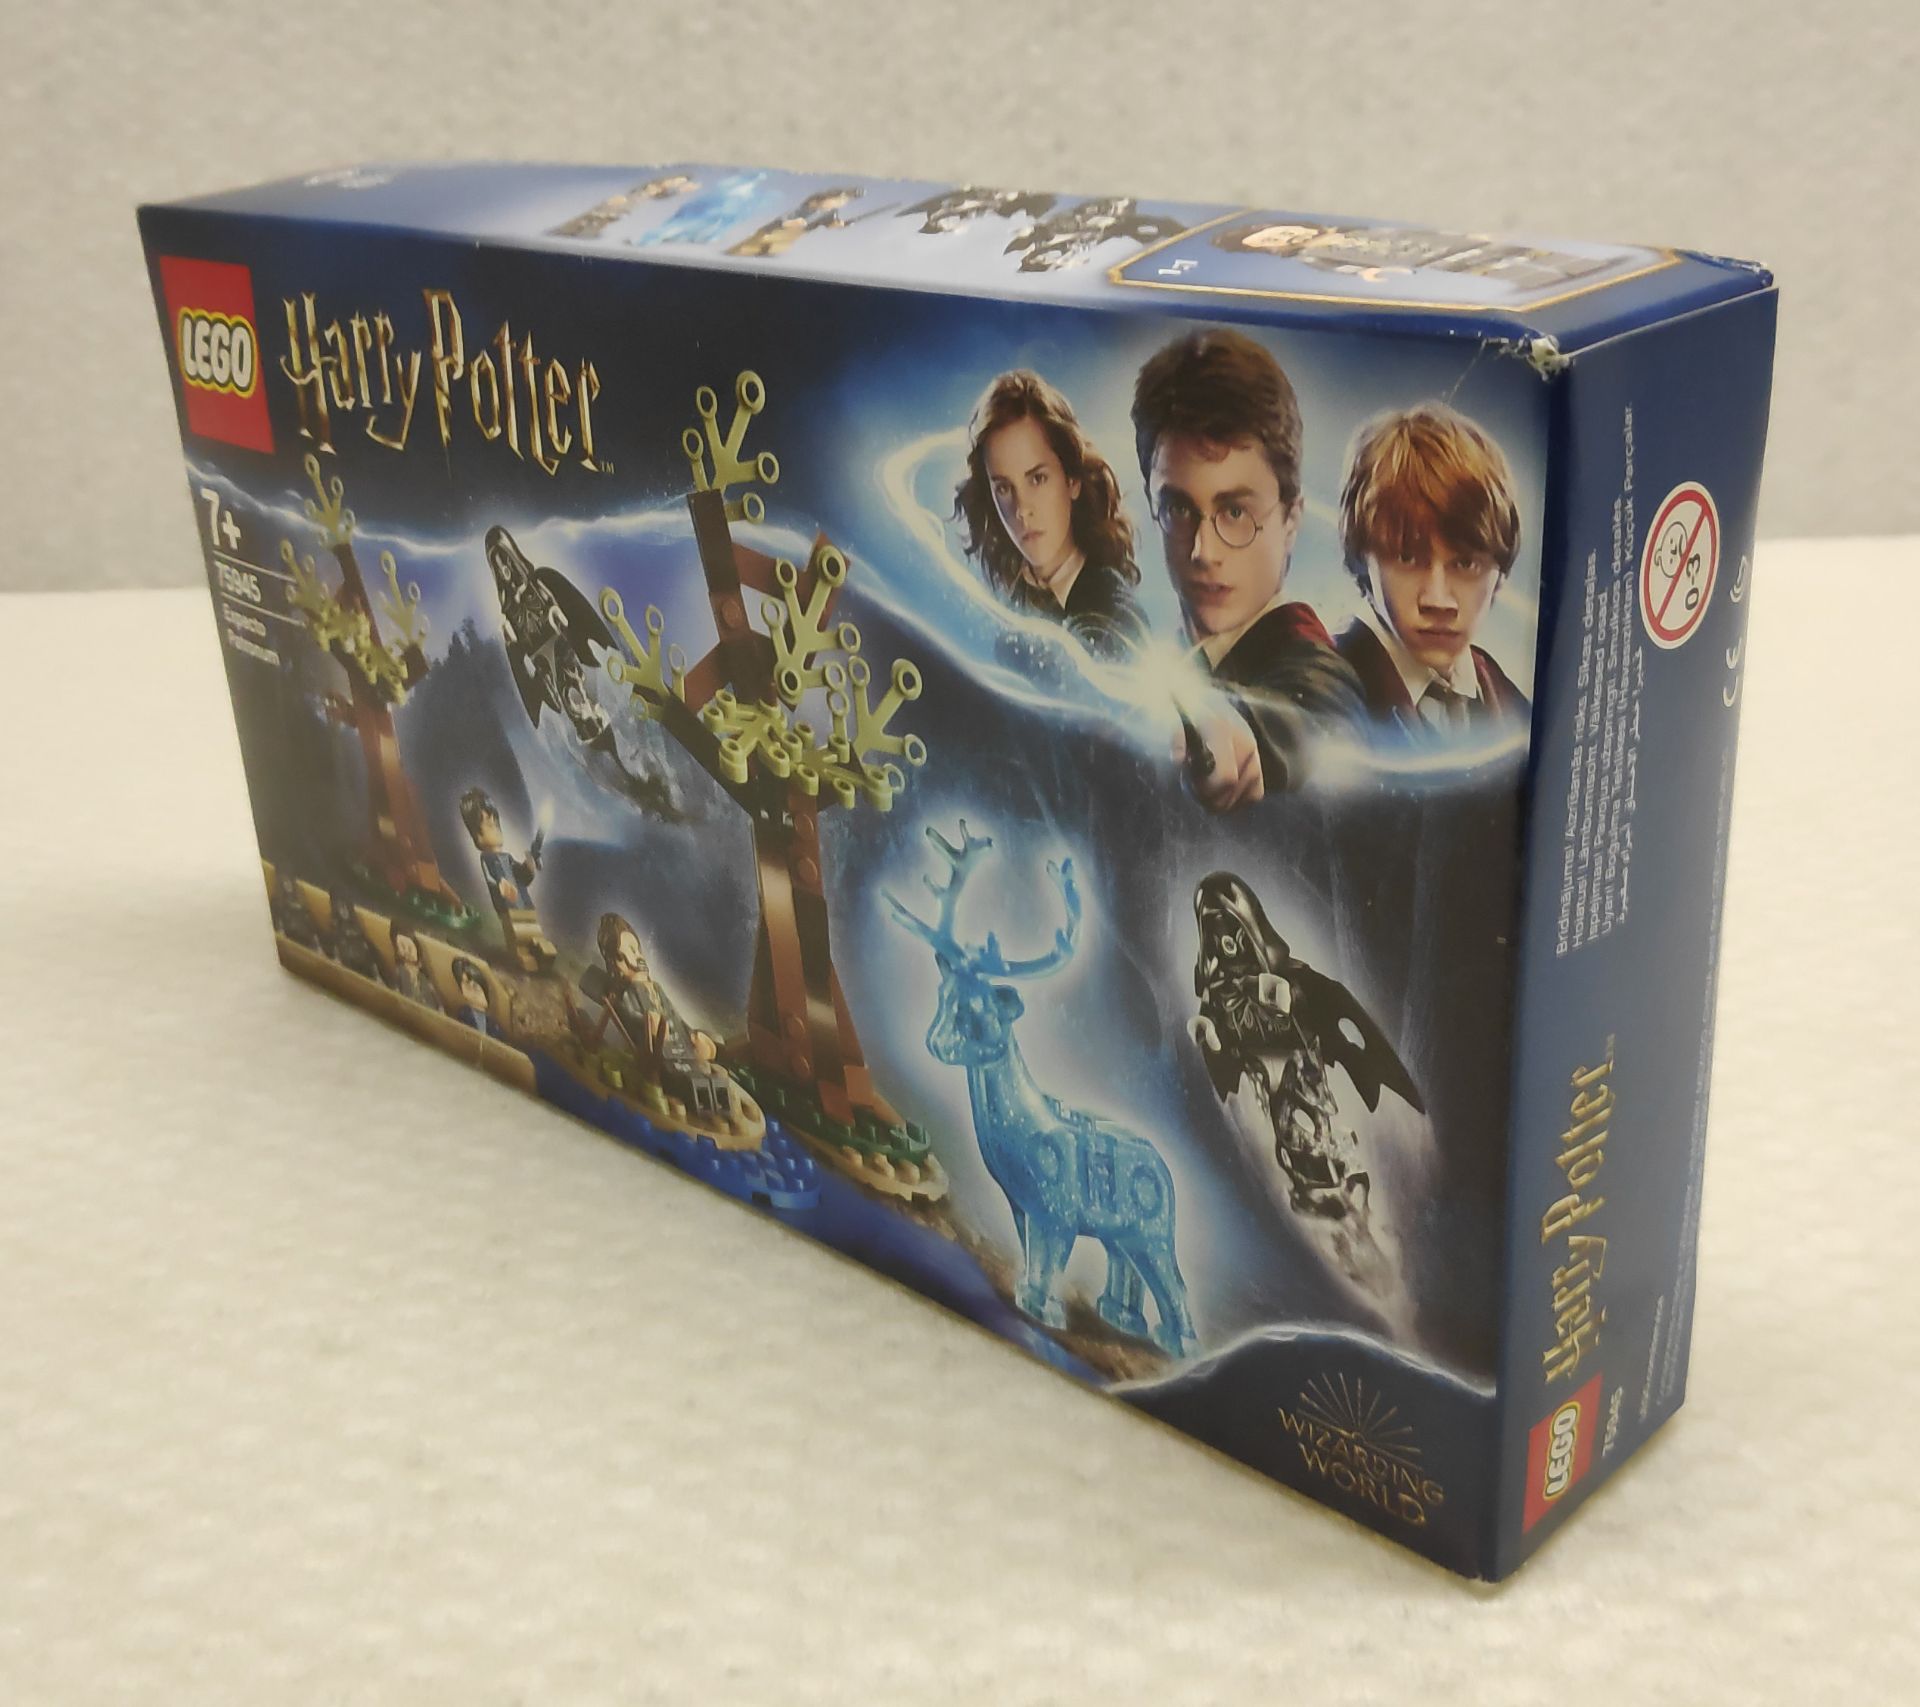 1 x Lego Harry Potter Expecto Patronum Set - New/Boxed - Set # 75945 - Image 2 of 10